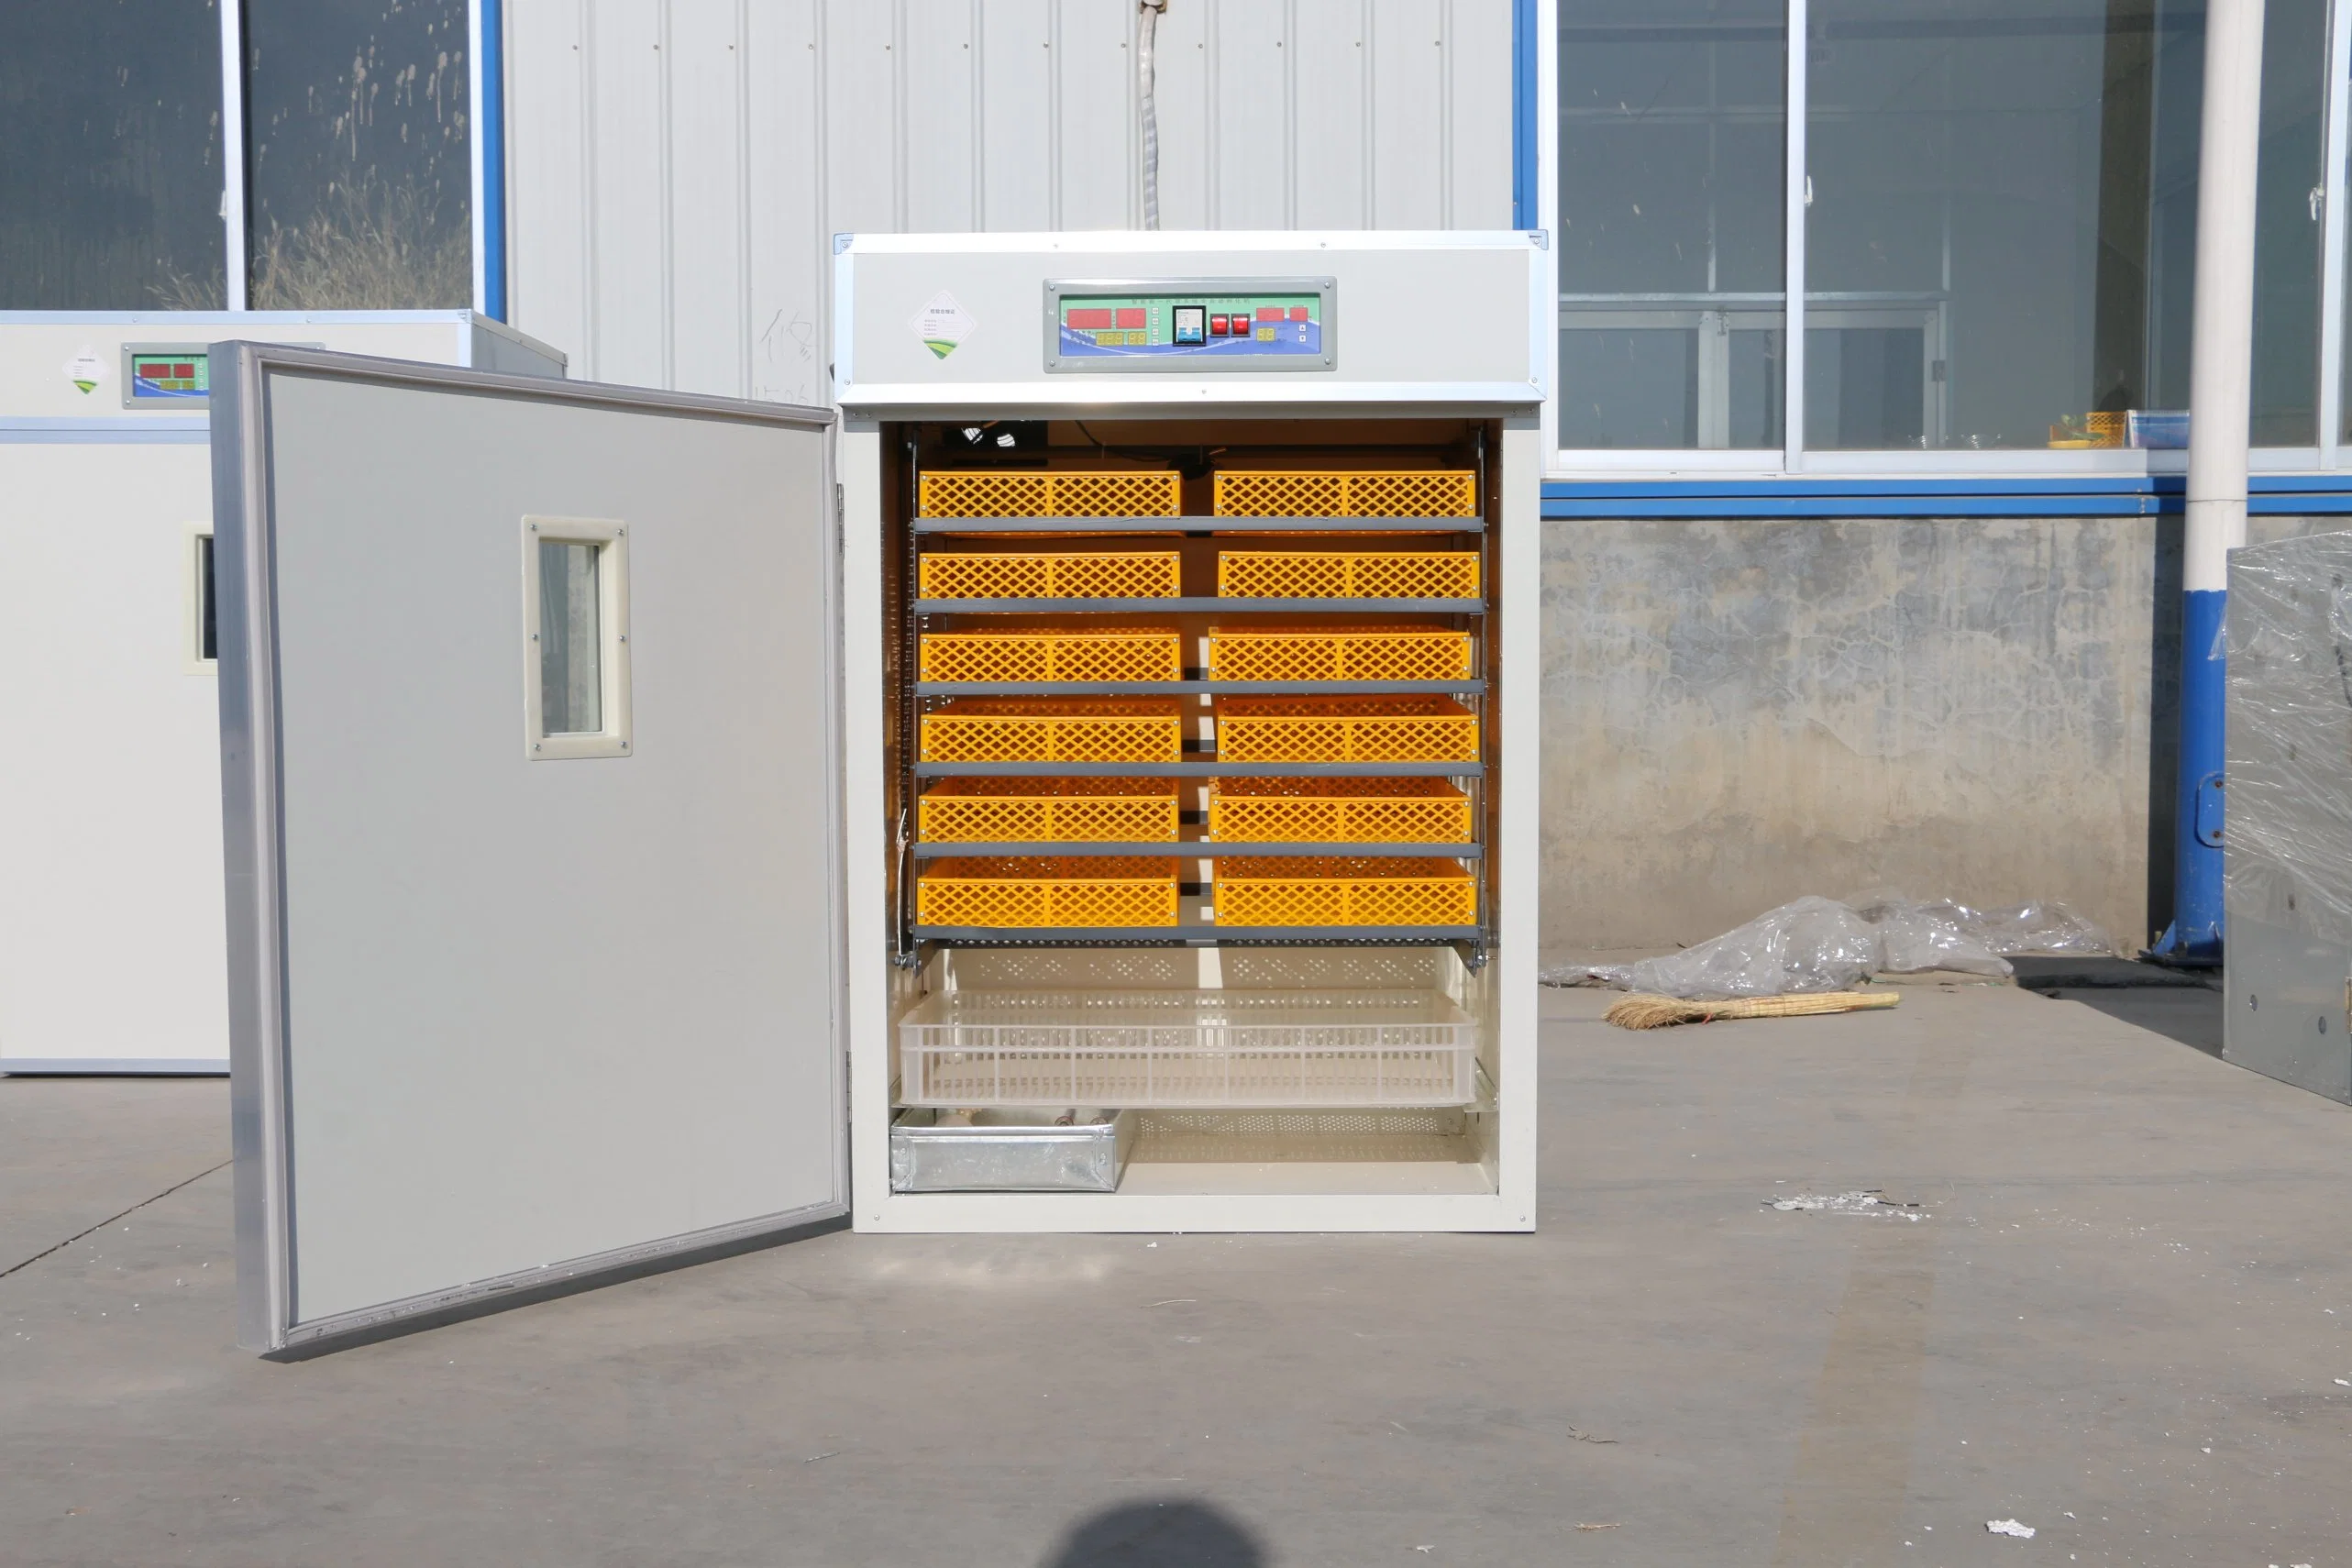 Solar totalmente automática incubadoras de huevos de loro clueca Equipo para avicultura Equipo